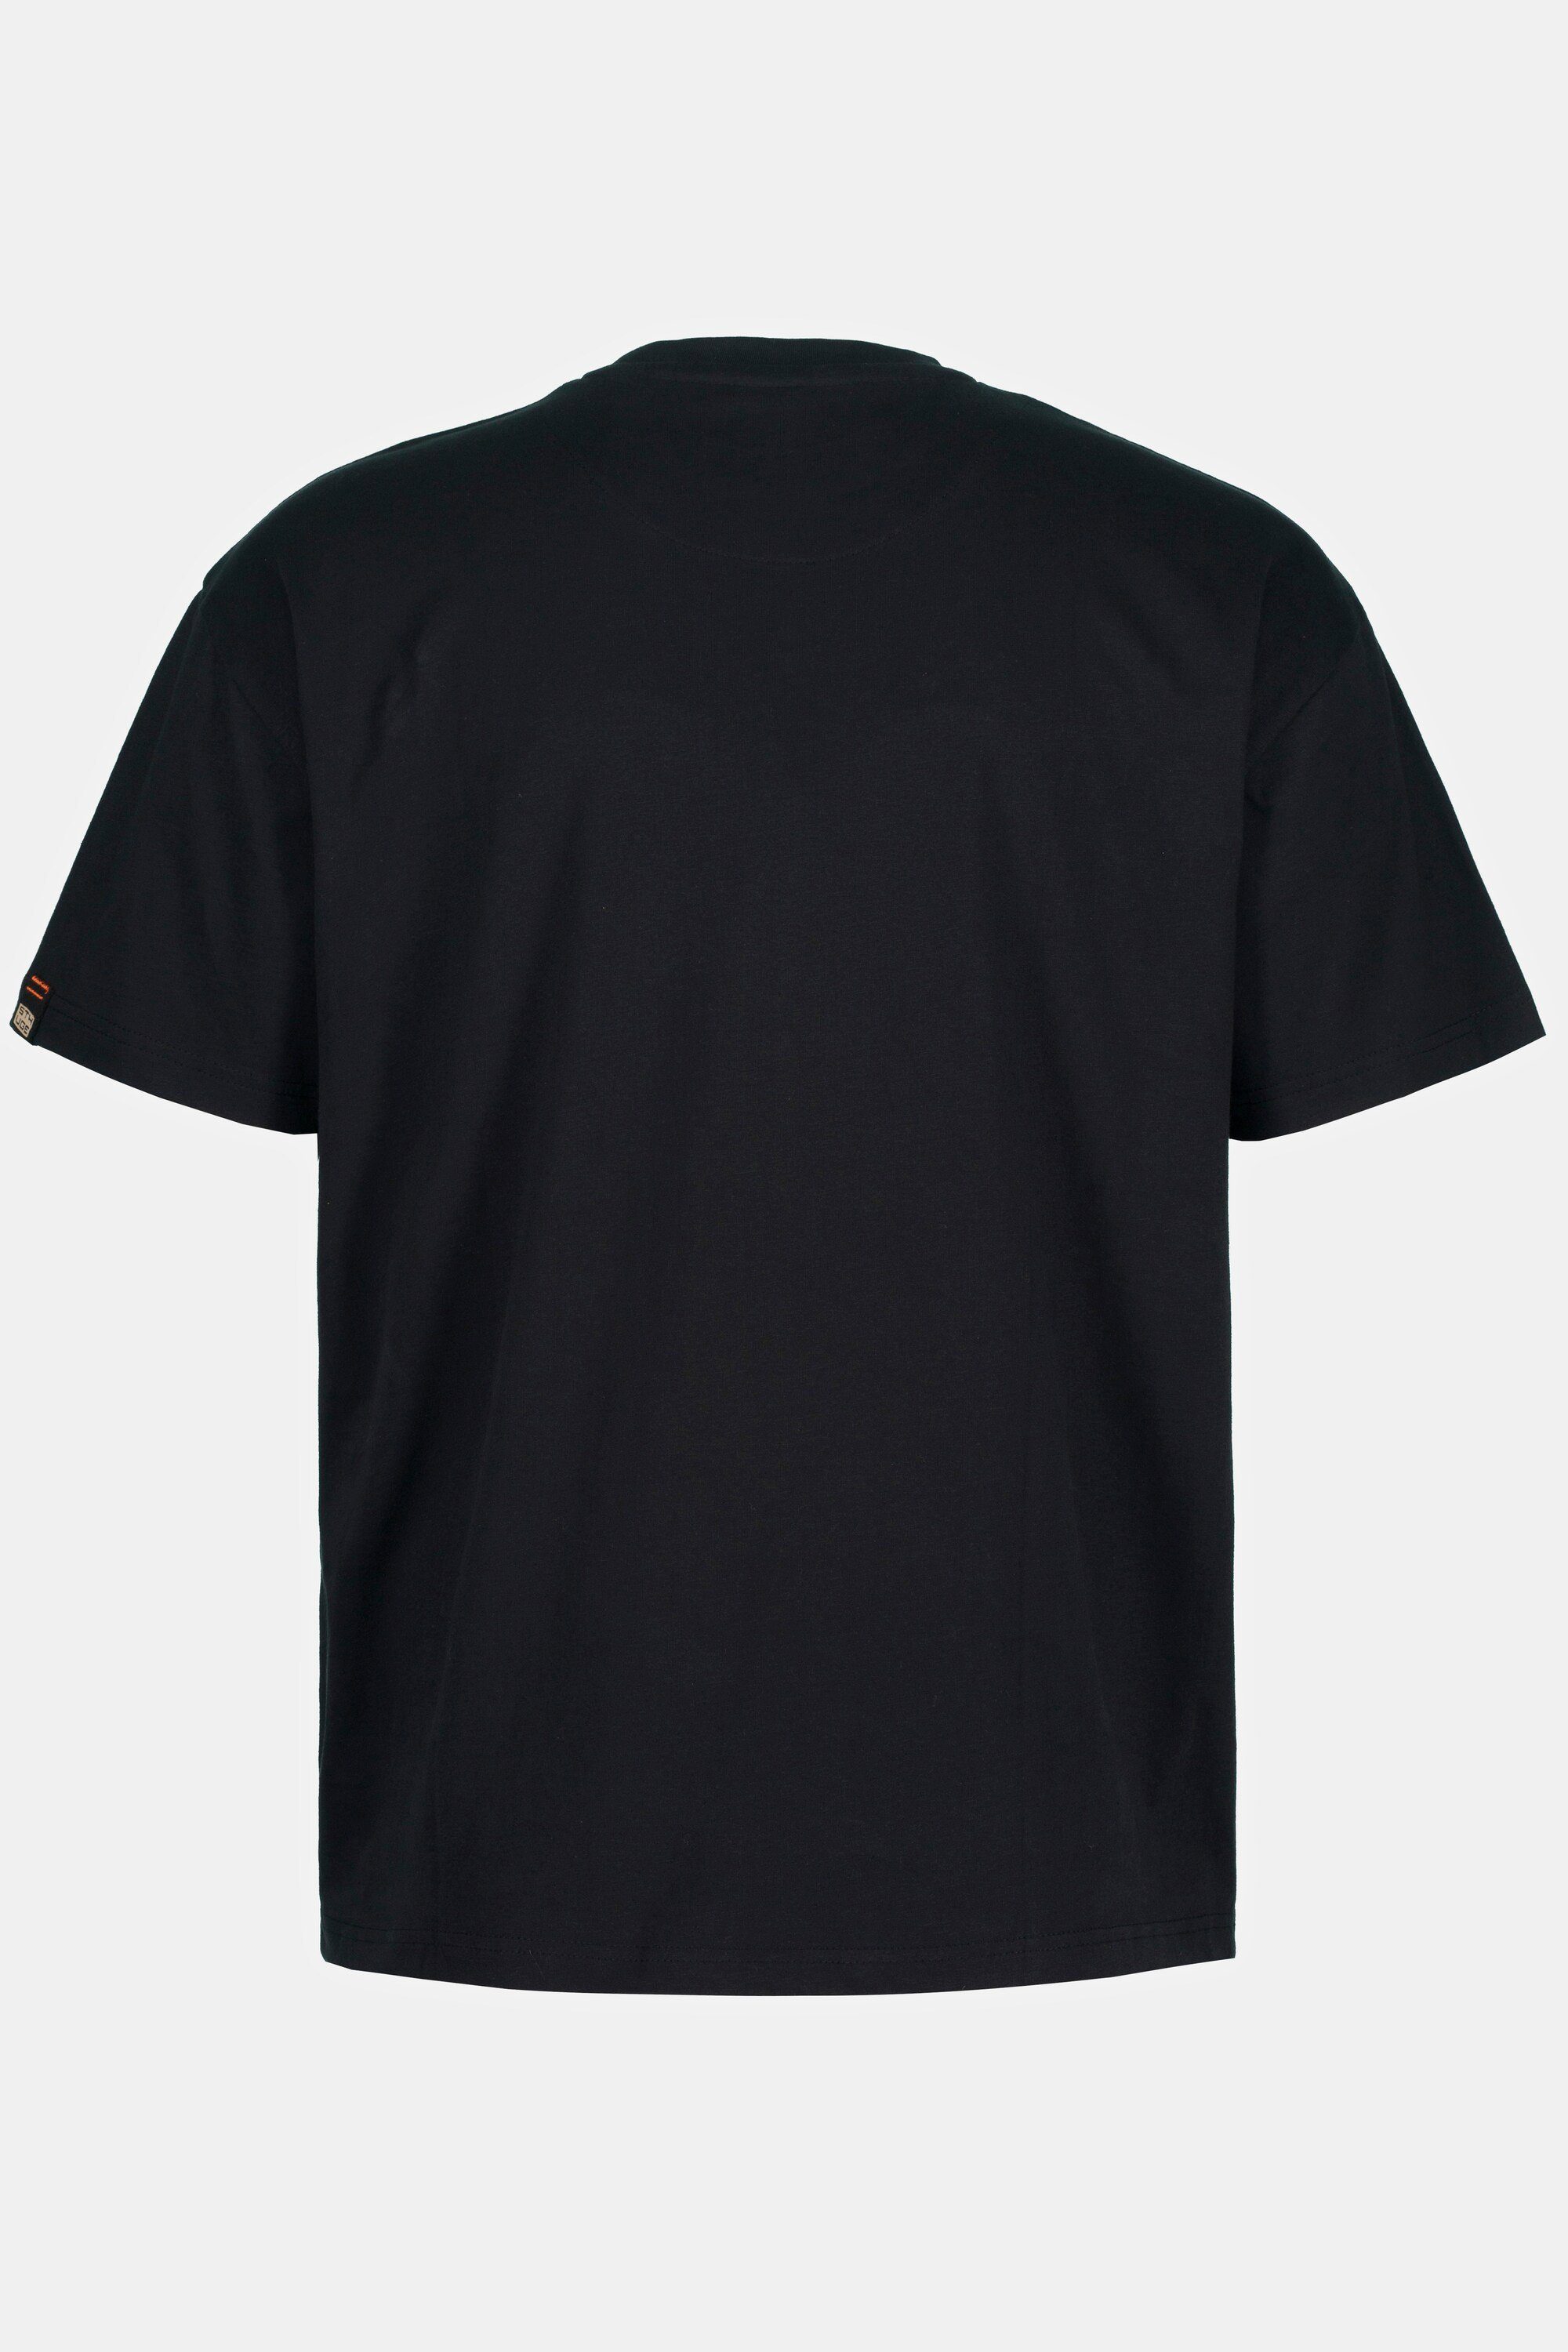 STHUGE Halbarm STHUGE XL-Print T-Shirt oversized T-Shirt Rundhals